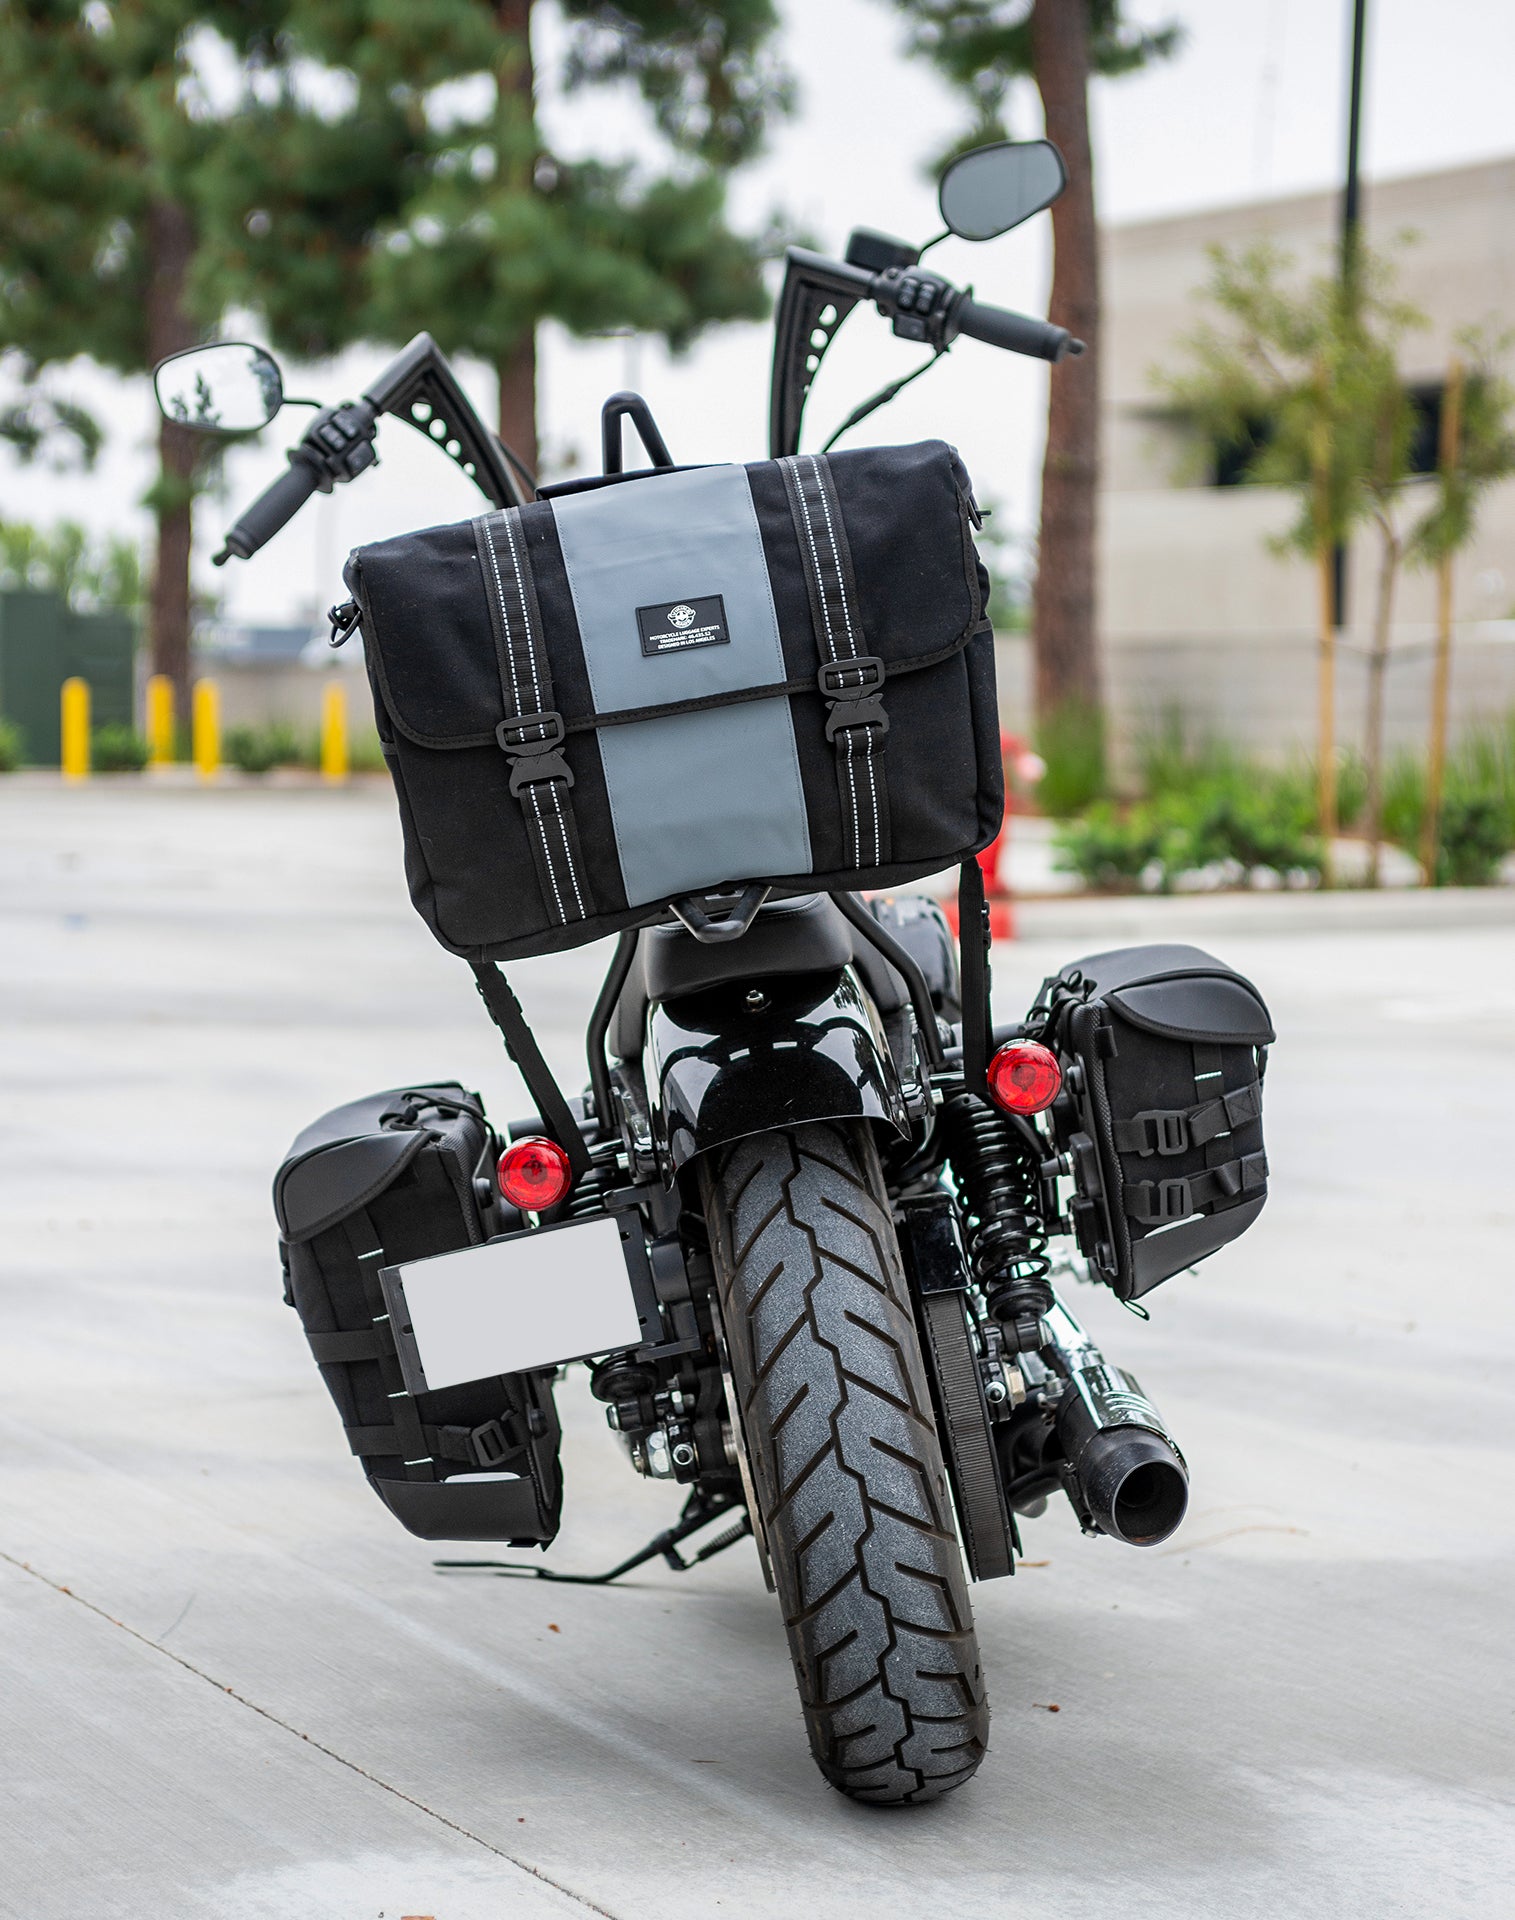 23L - Duo-tone Medium Victory Motorcycle Messenger Bag Gray/Black